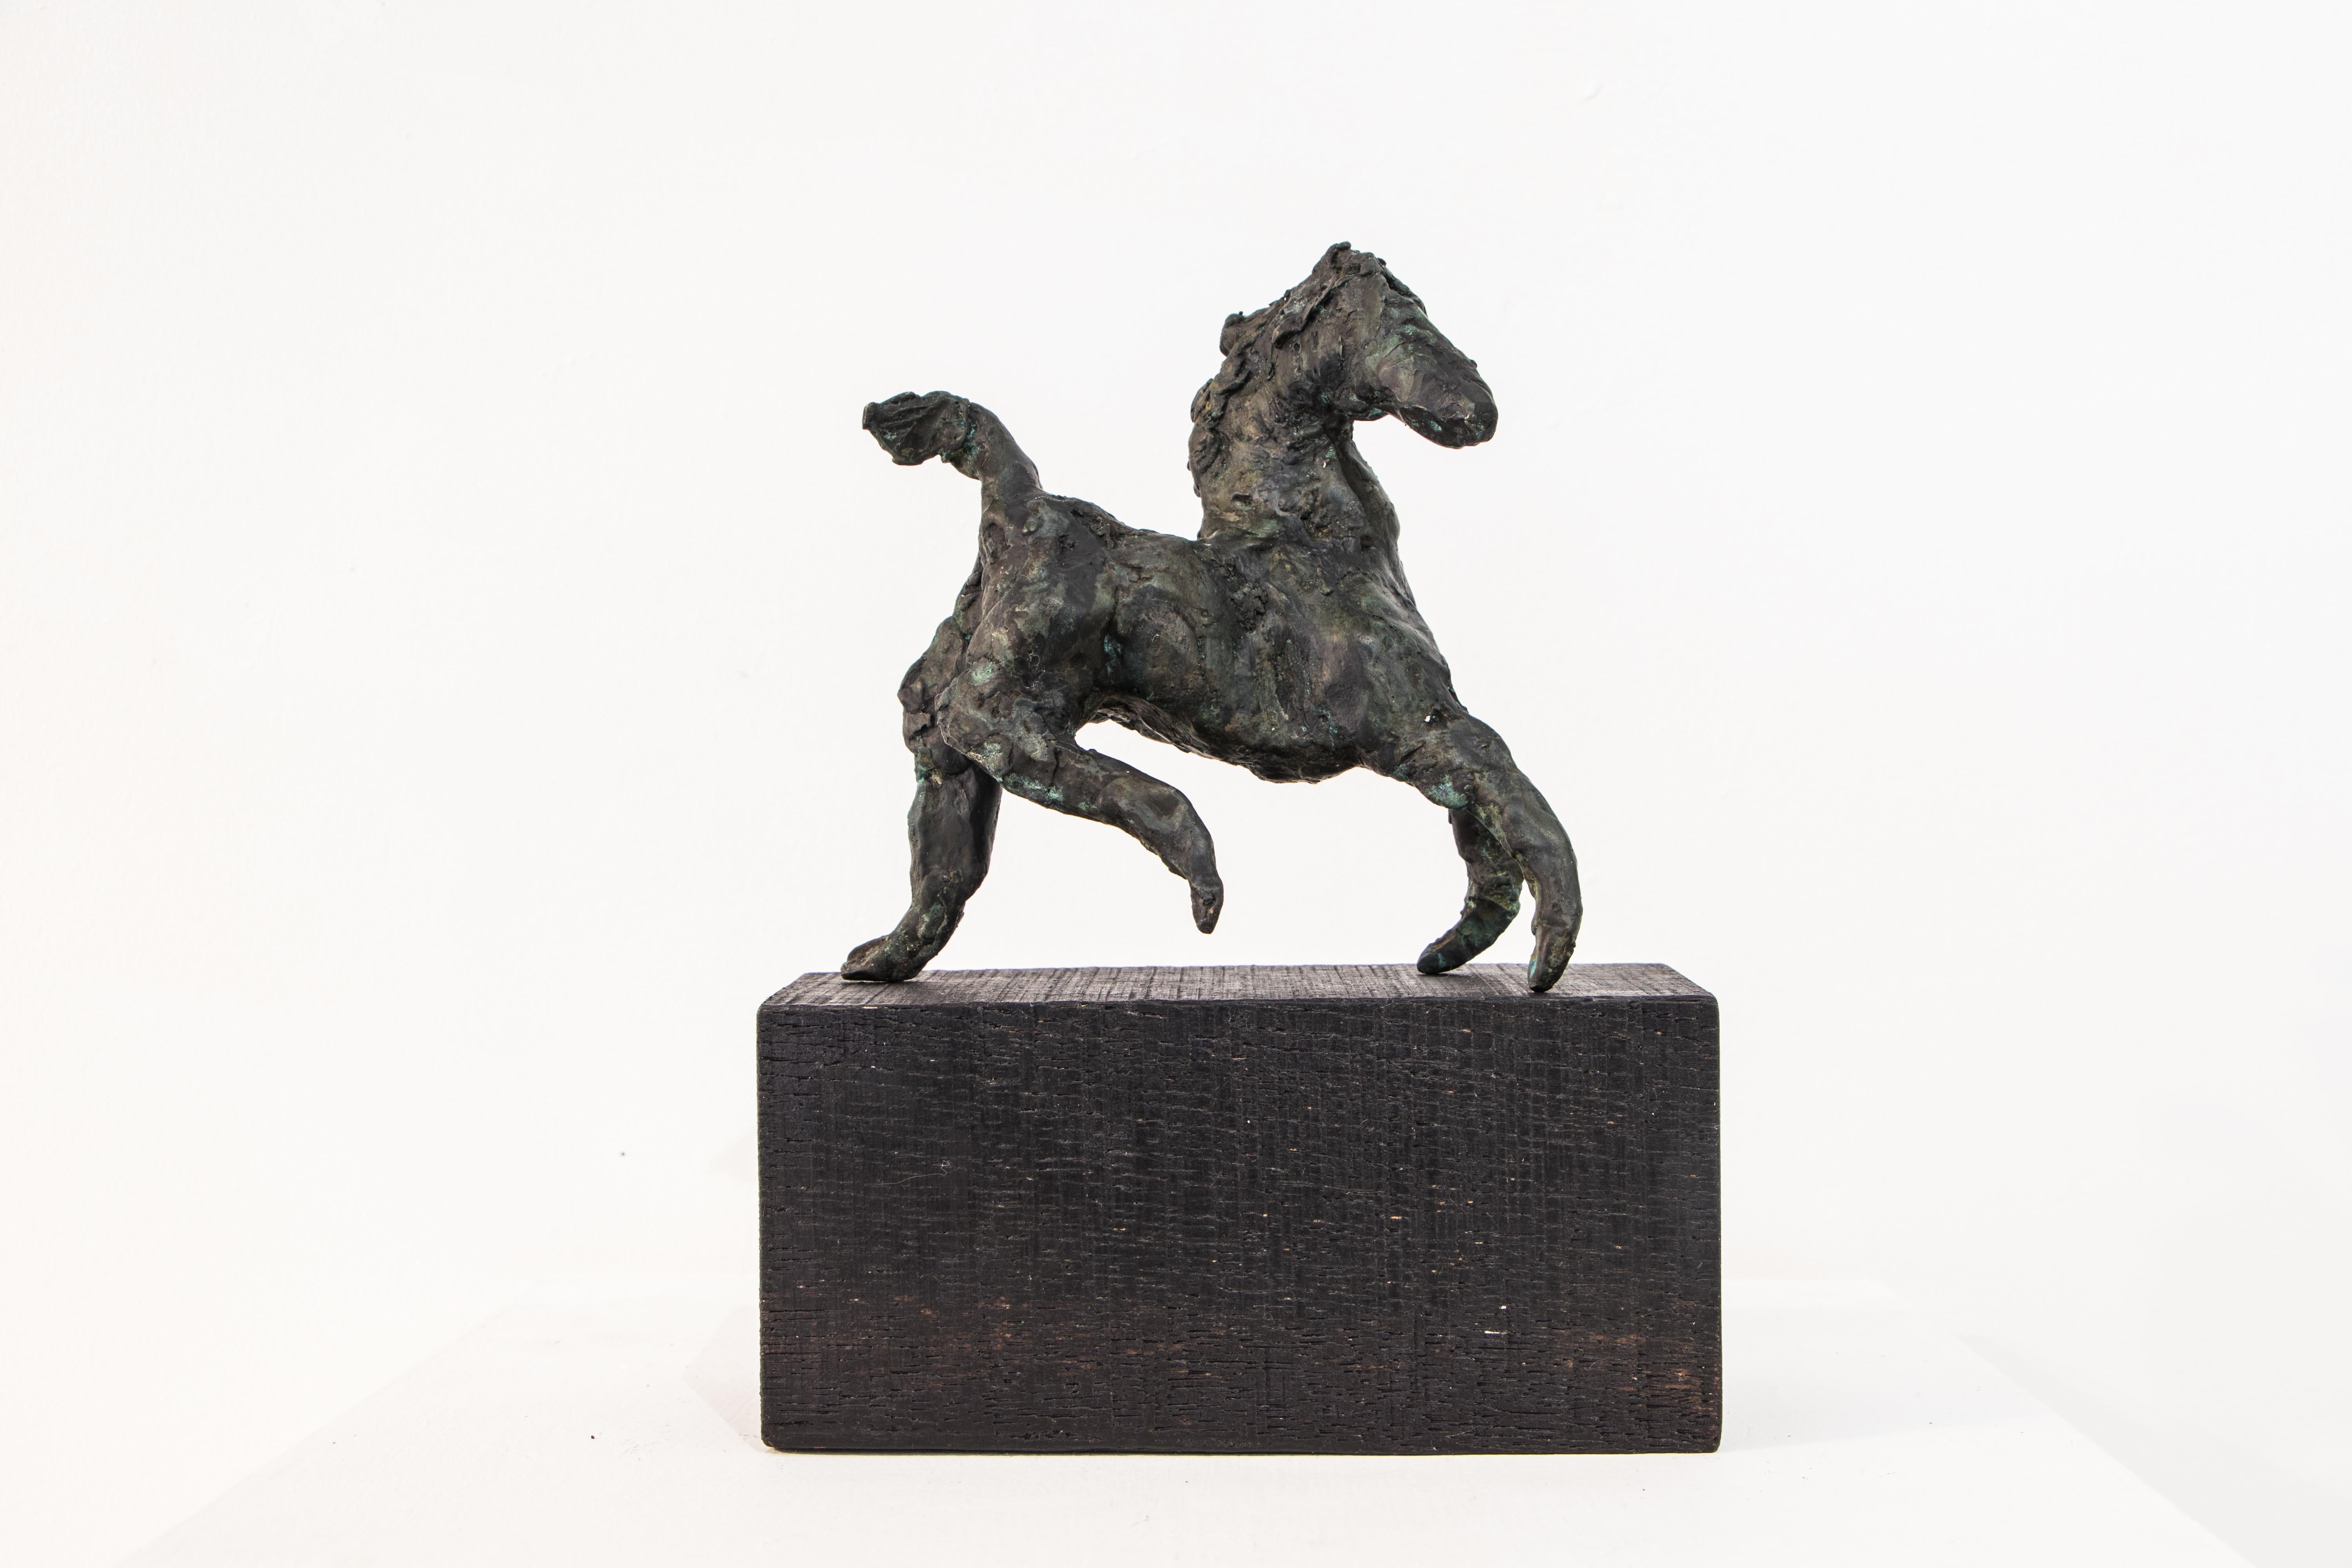 Danusia Wurm Figurative Sculpture - "Turning Point", Contemporary Bronze Horse